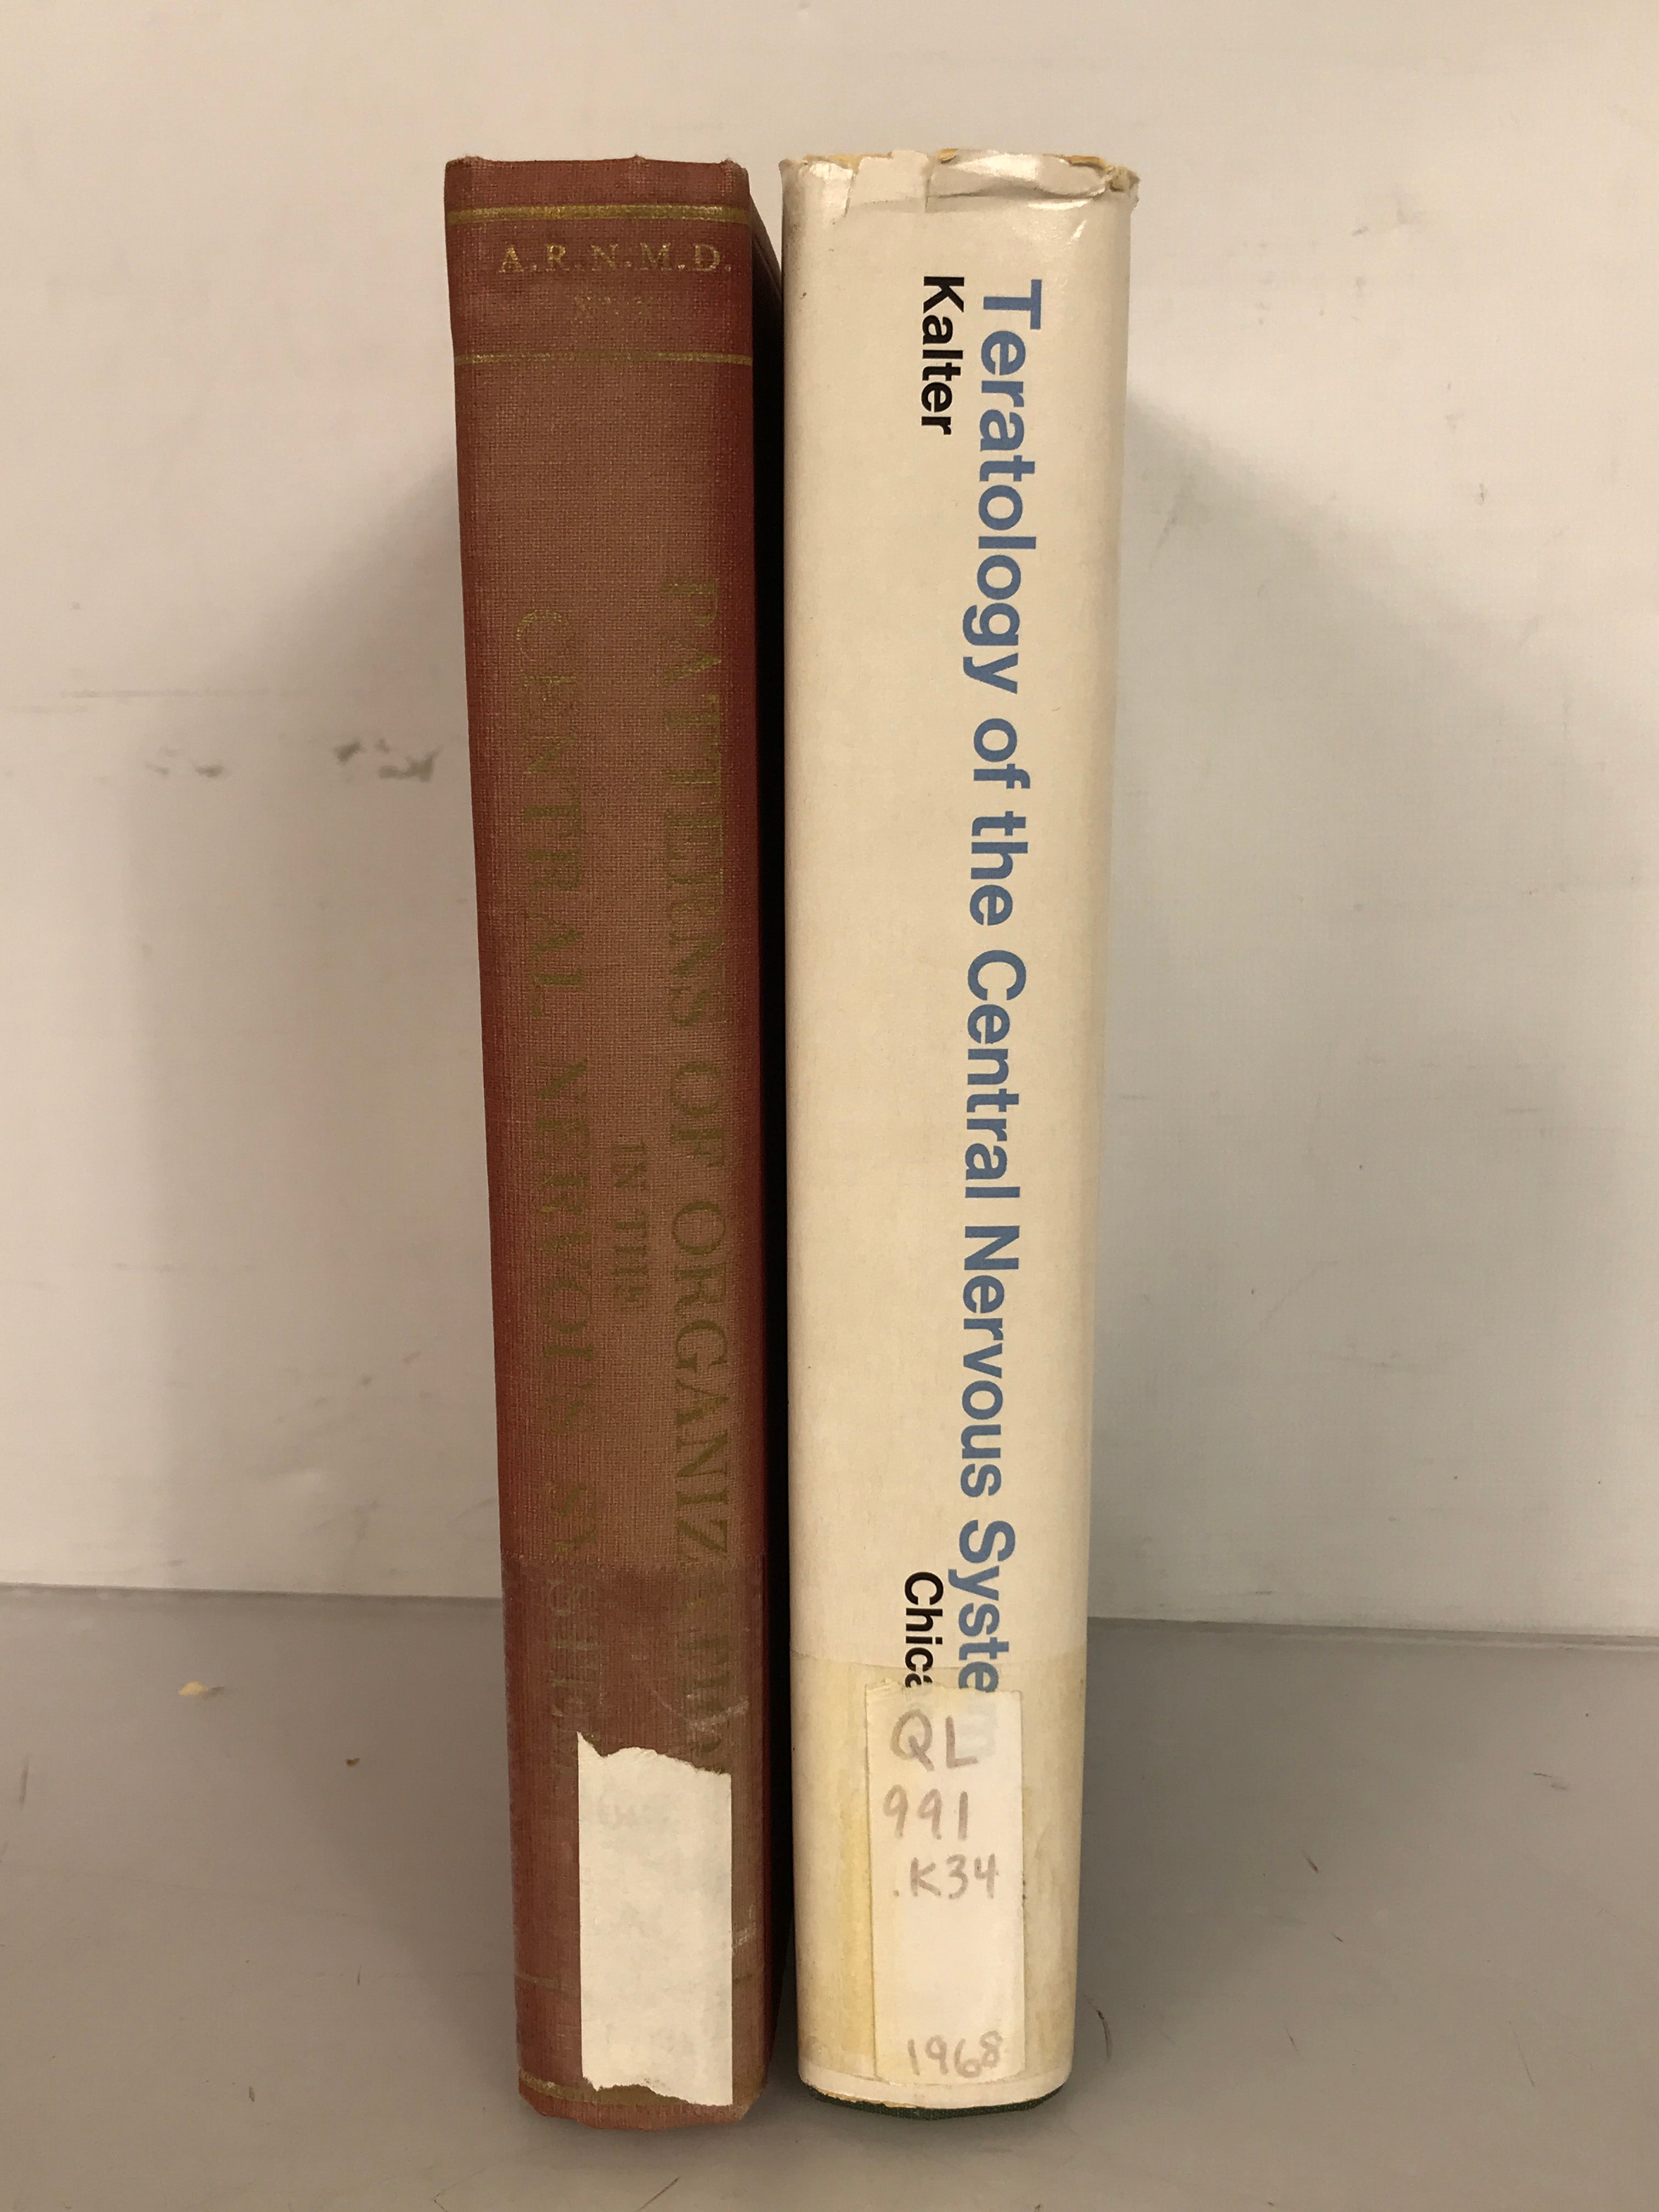 Lot of 2 Central Nervous System Books 1968 HC DJ